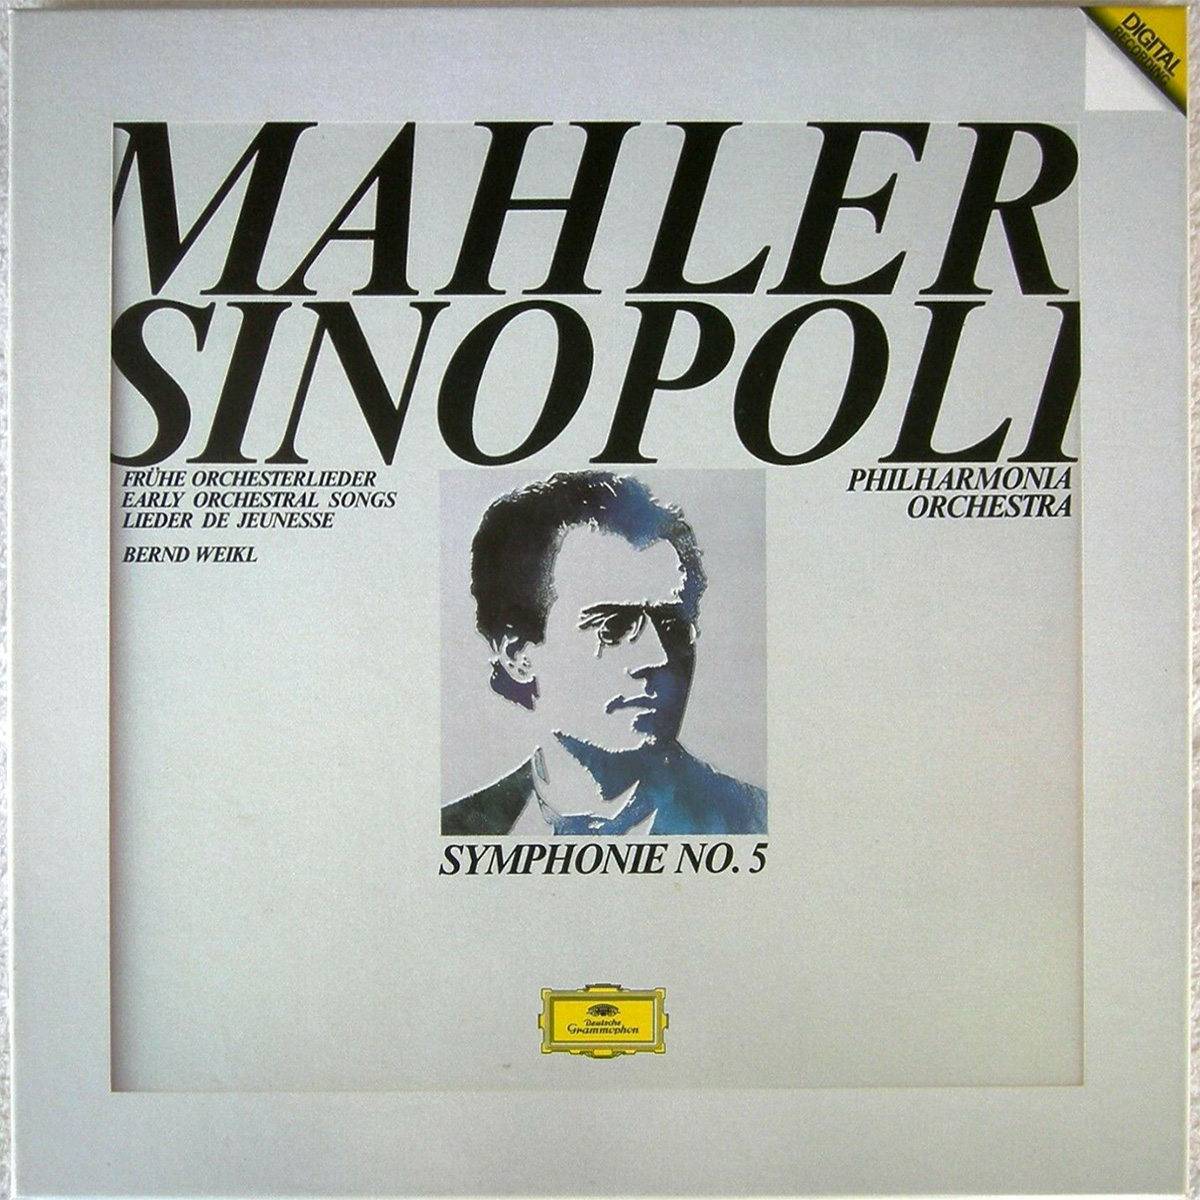 DGG 415 476 Mahler Symphonie 5 Sinopoli DGG Digital Aufnahme